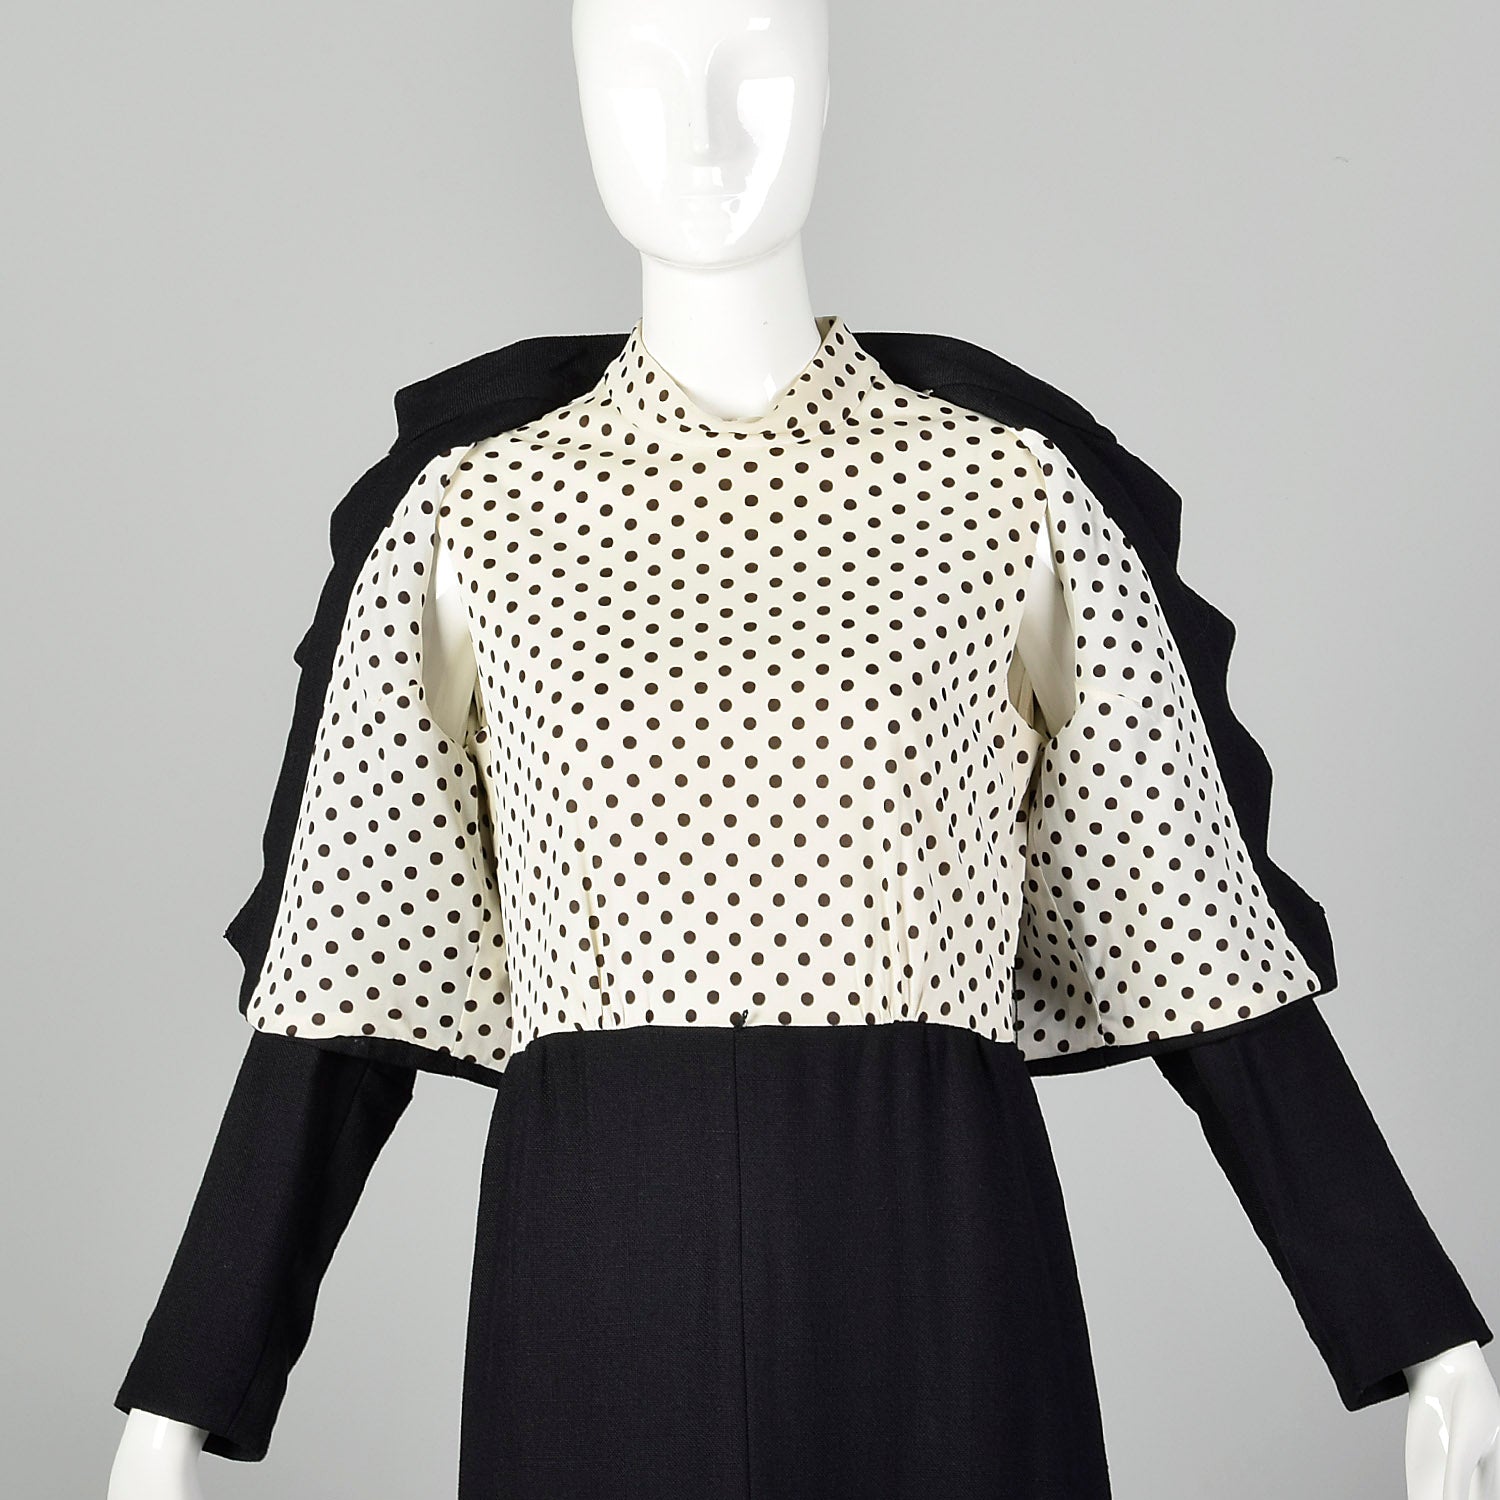 Large 1960s Black and White Polka Dot Dress Set